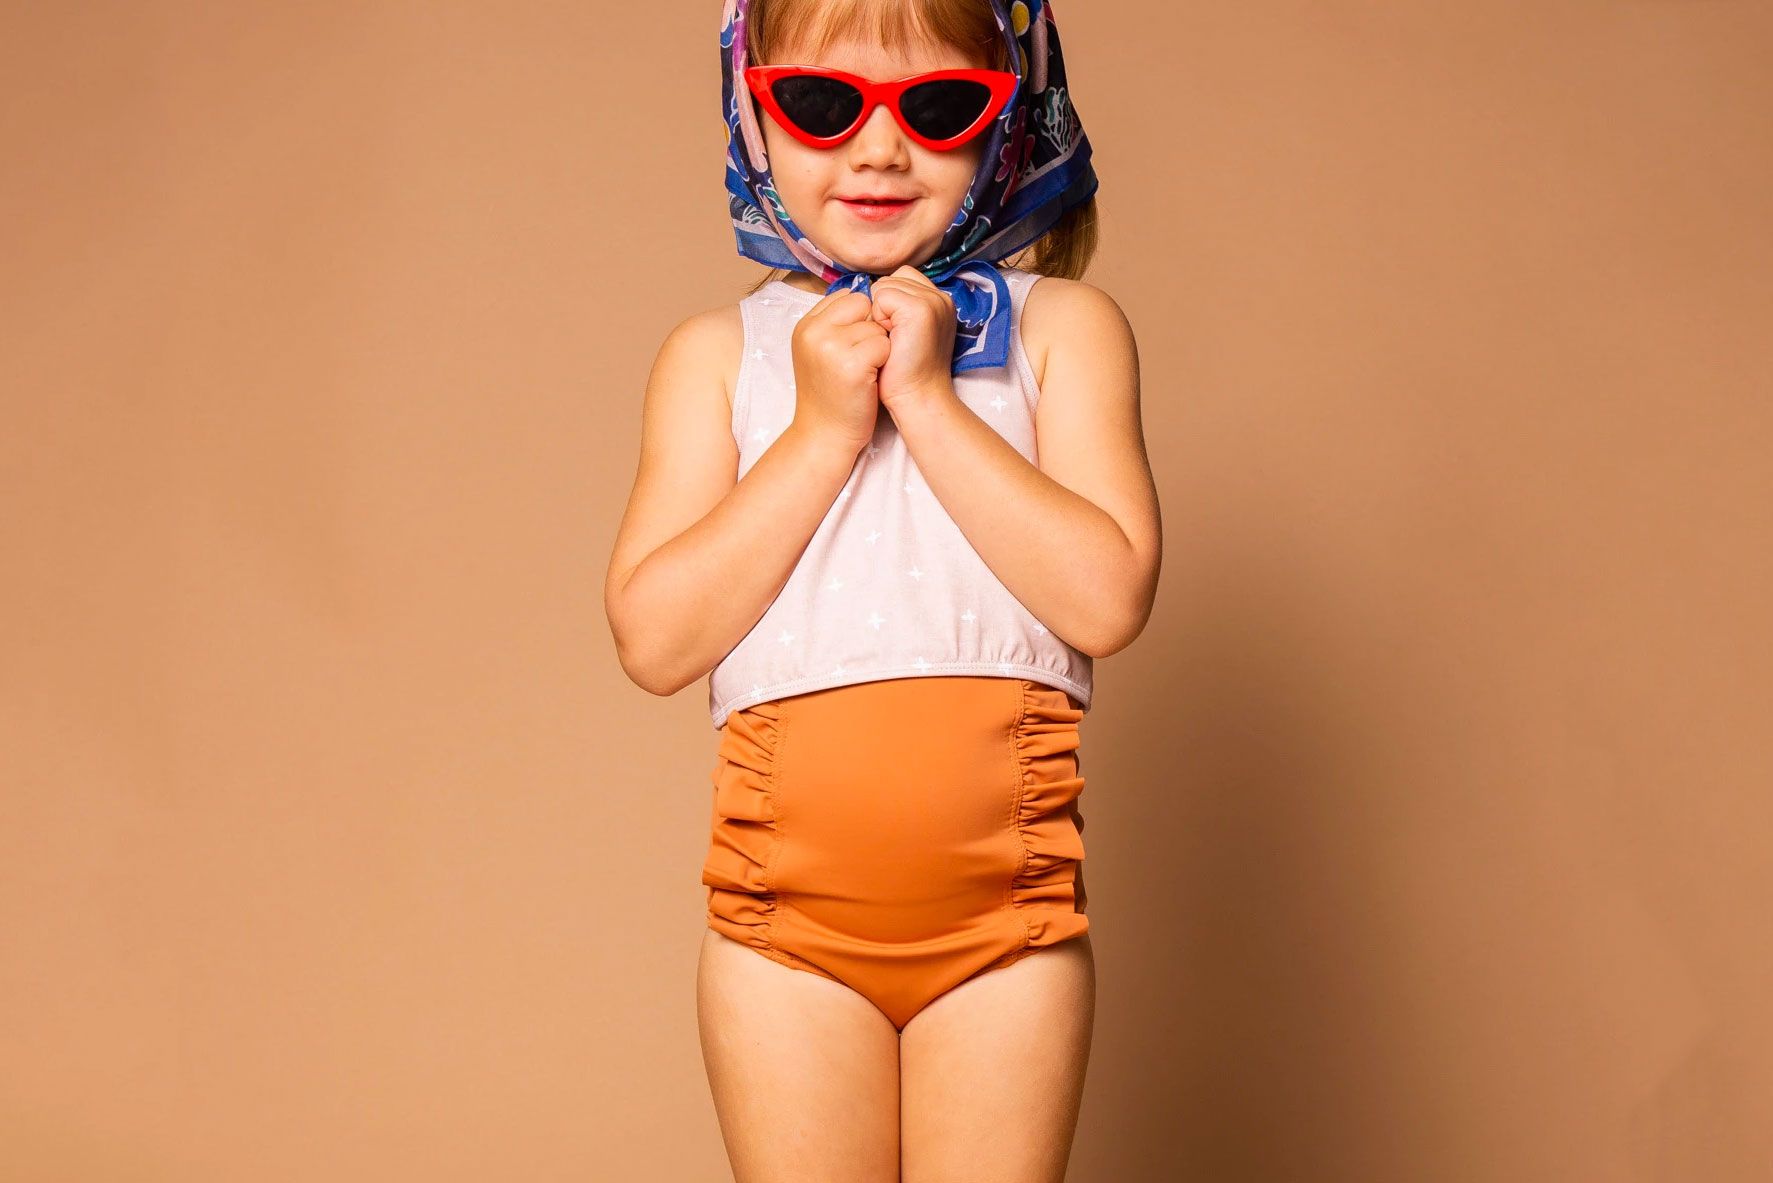 WINZIK Baby Girls One Piece Swimsuit Cute Duck Print Toddler Kids Swimwear Beachwear Bathing Suit Summer Clothes with Hat